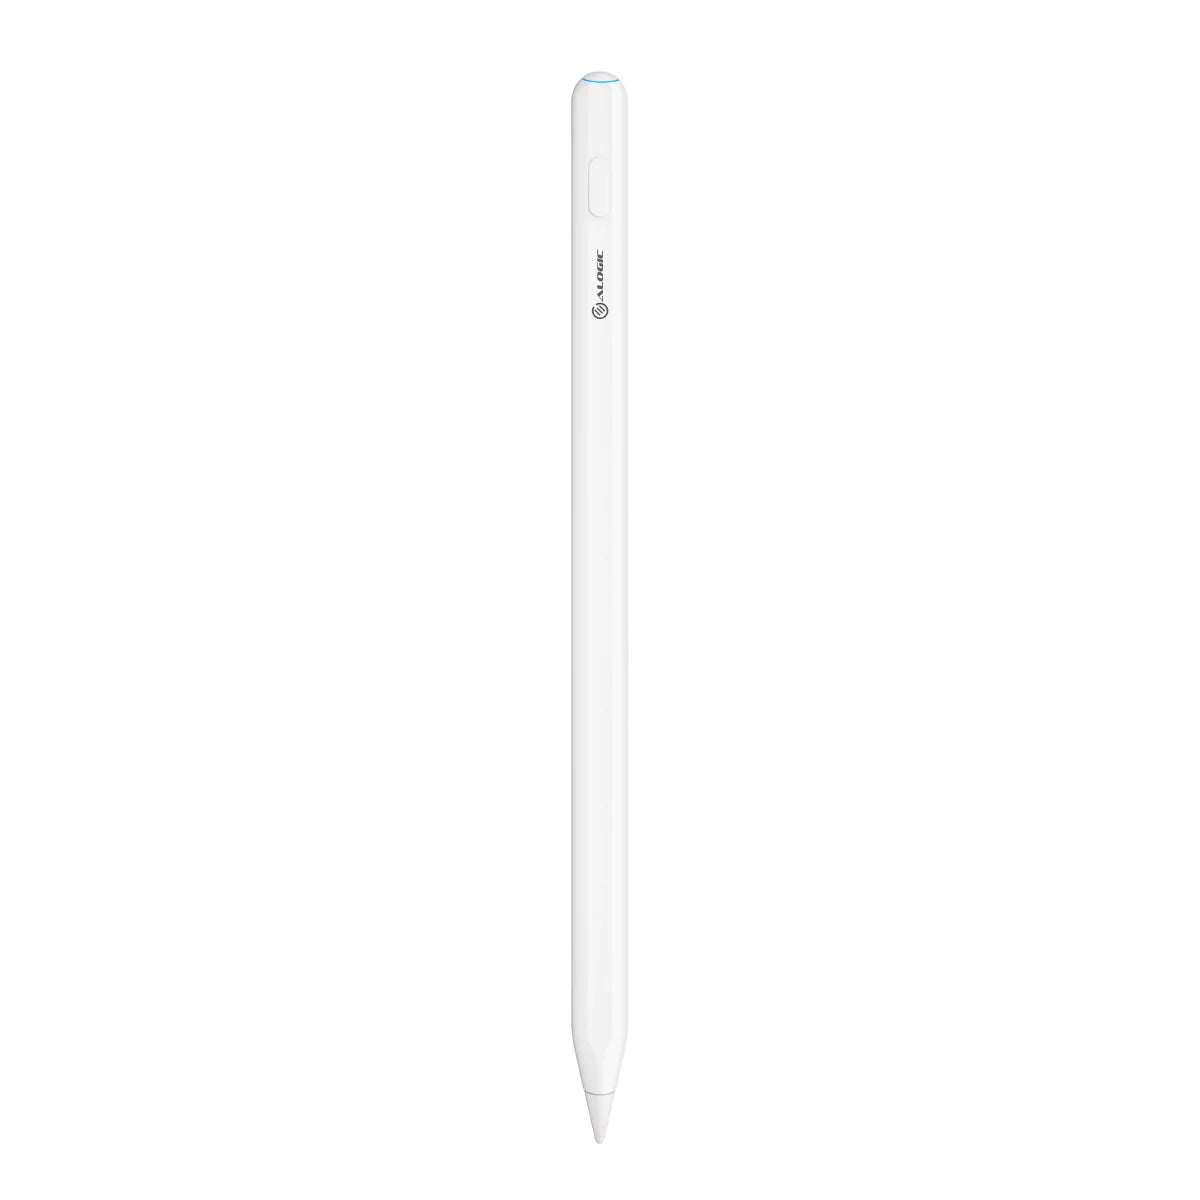 iPad Stylus Pen with Wireless Charging